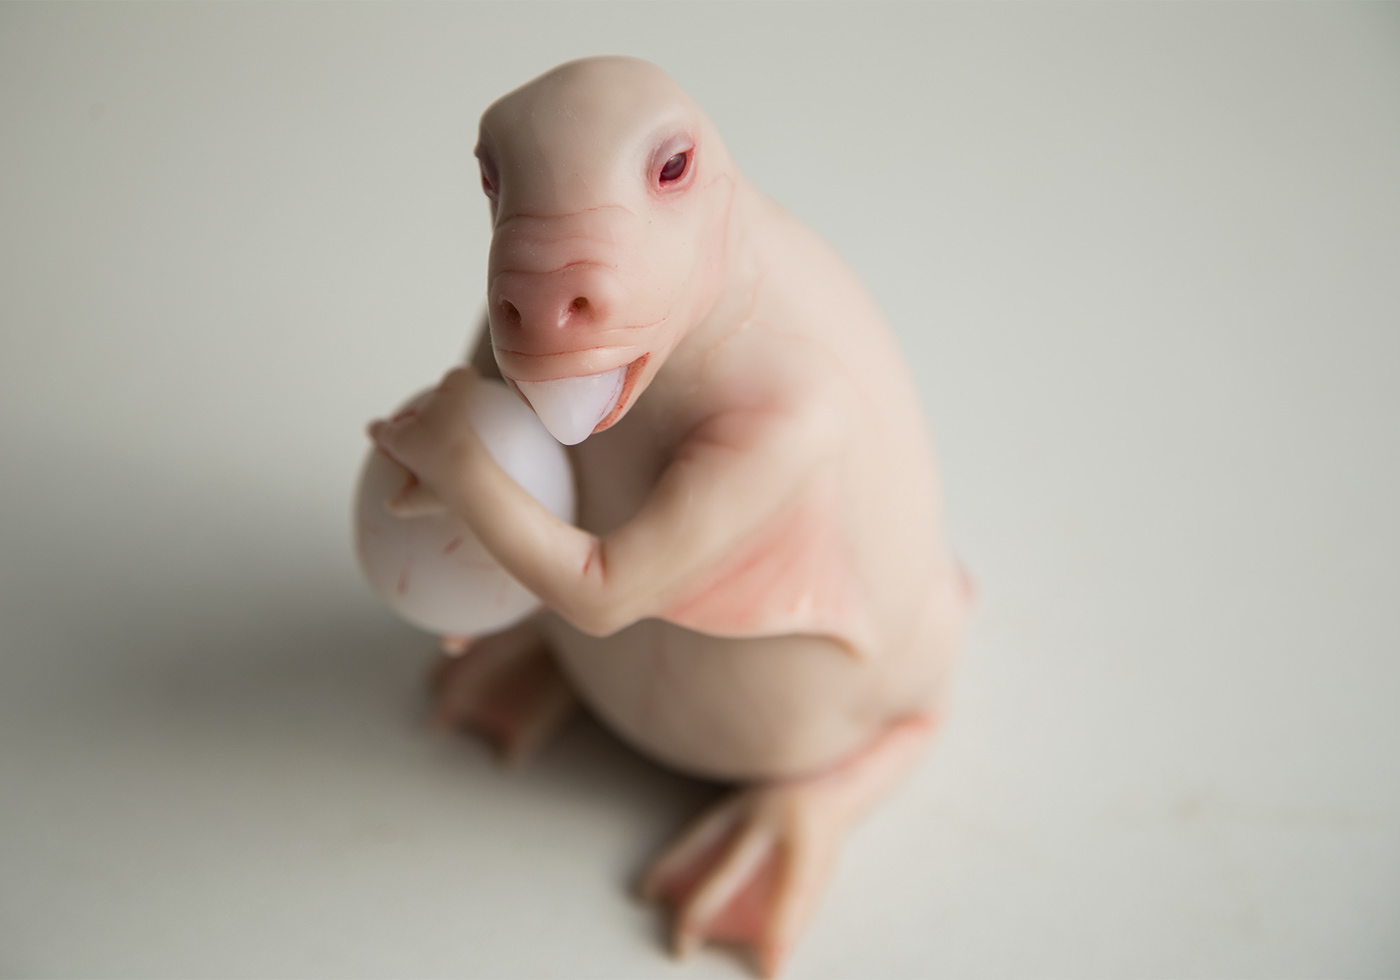 Character Character design  creature cute doll dragon handmade Sculpt sculpture toy